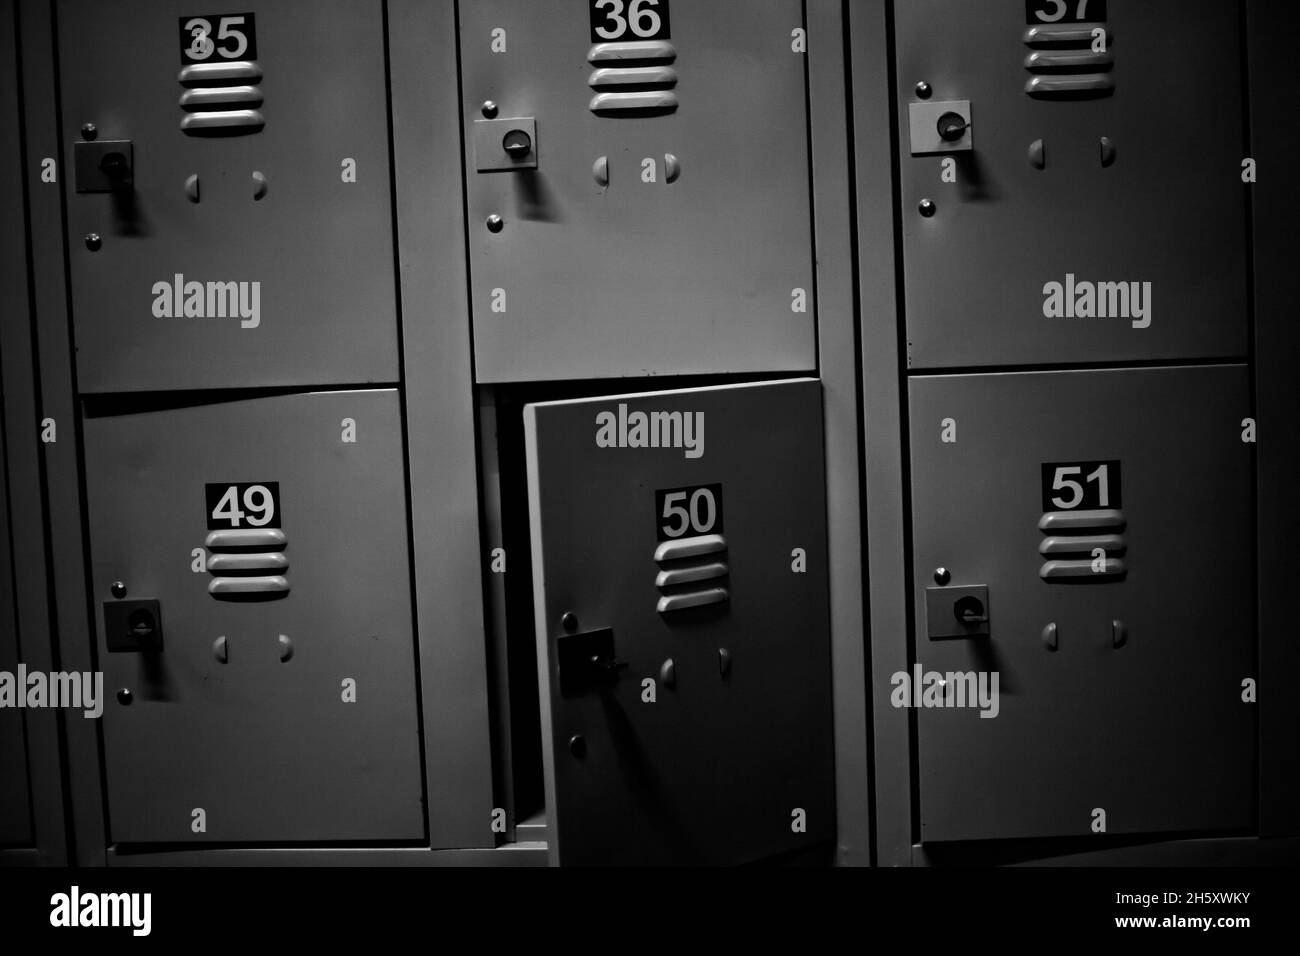 row of lockers with dramatic lighting Stock Photo